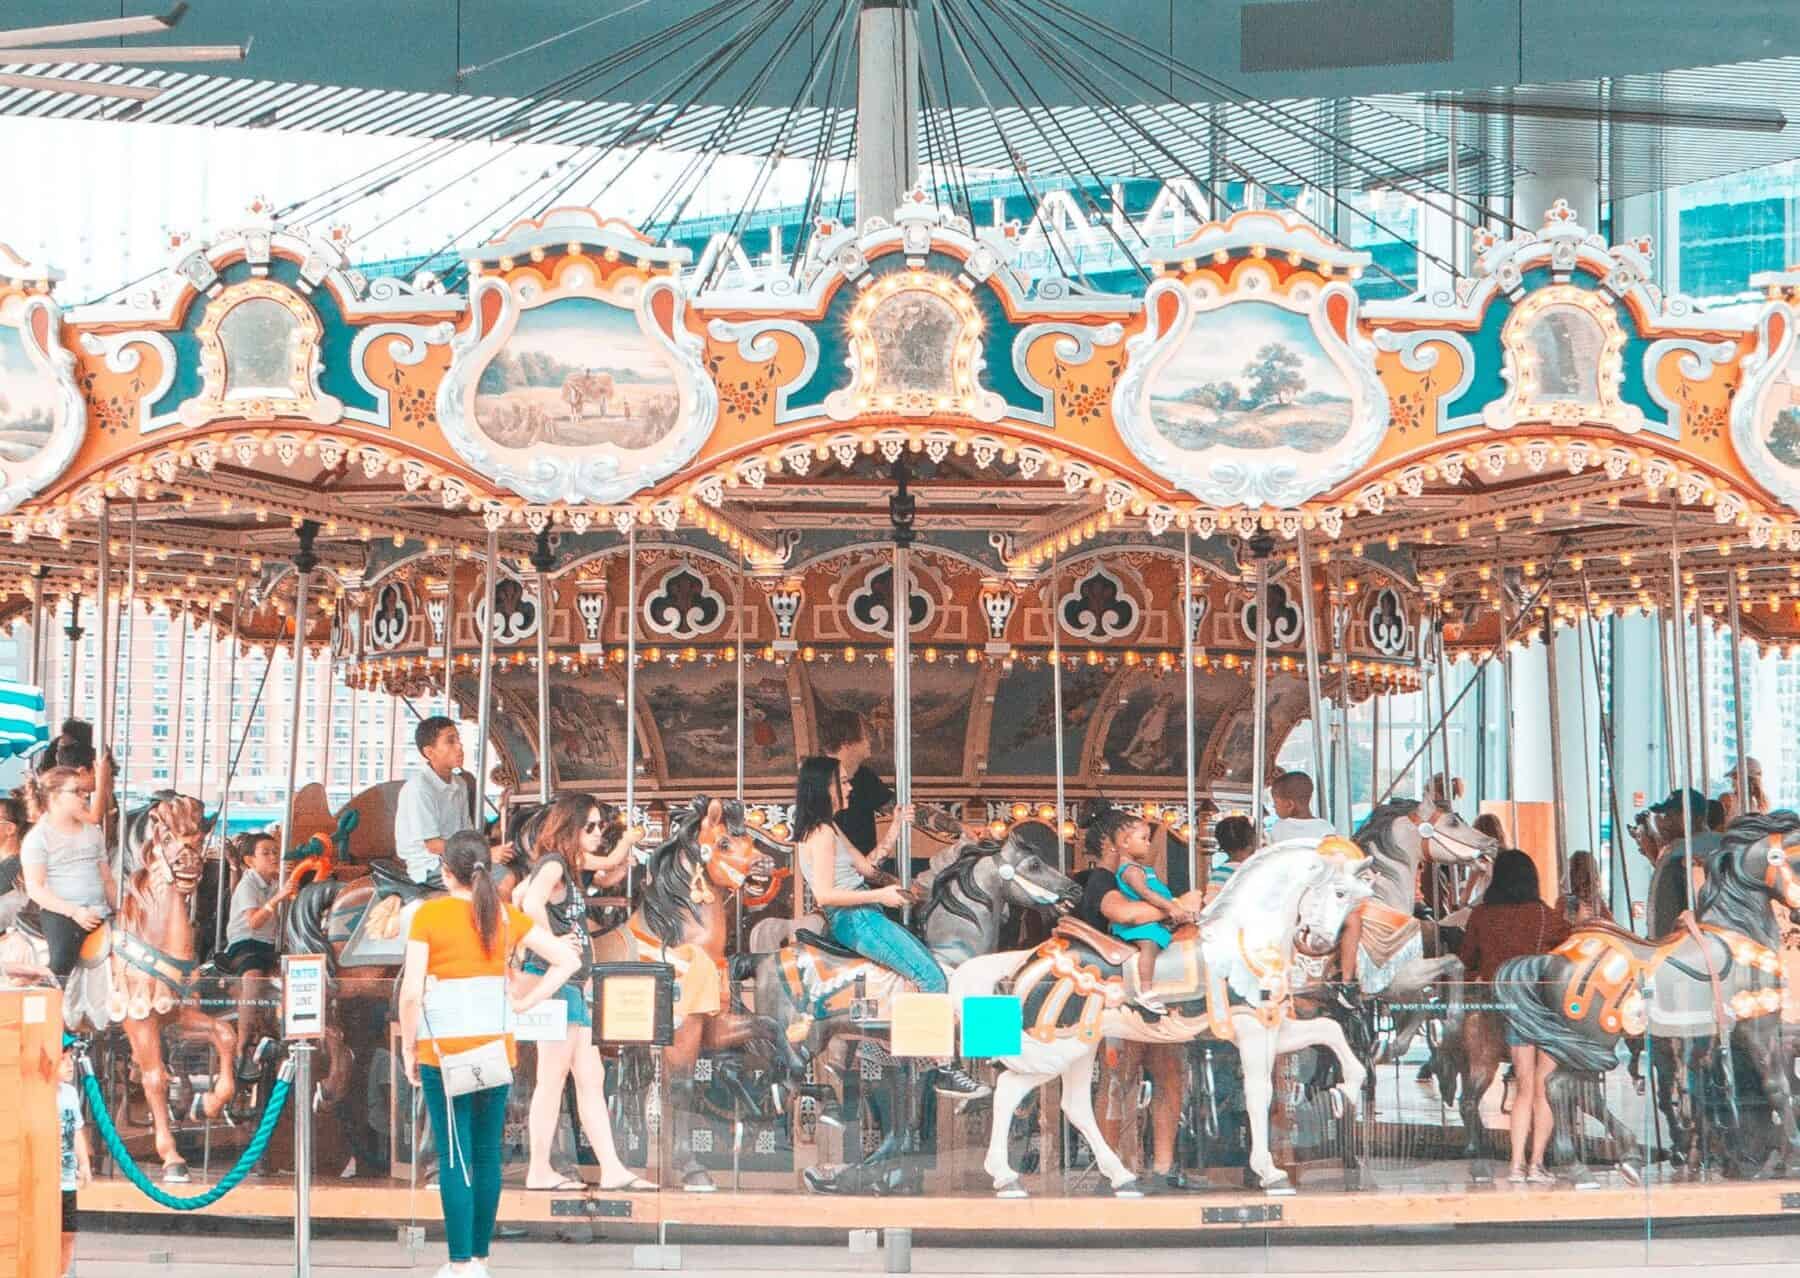 Janes Carousel in Dumbo